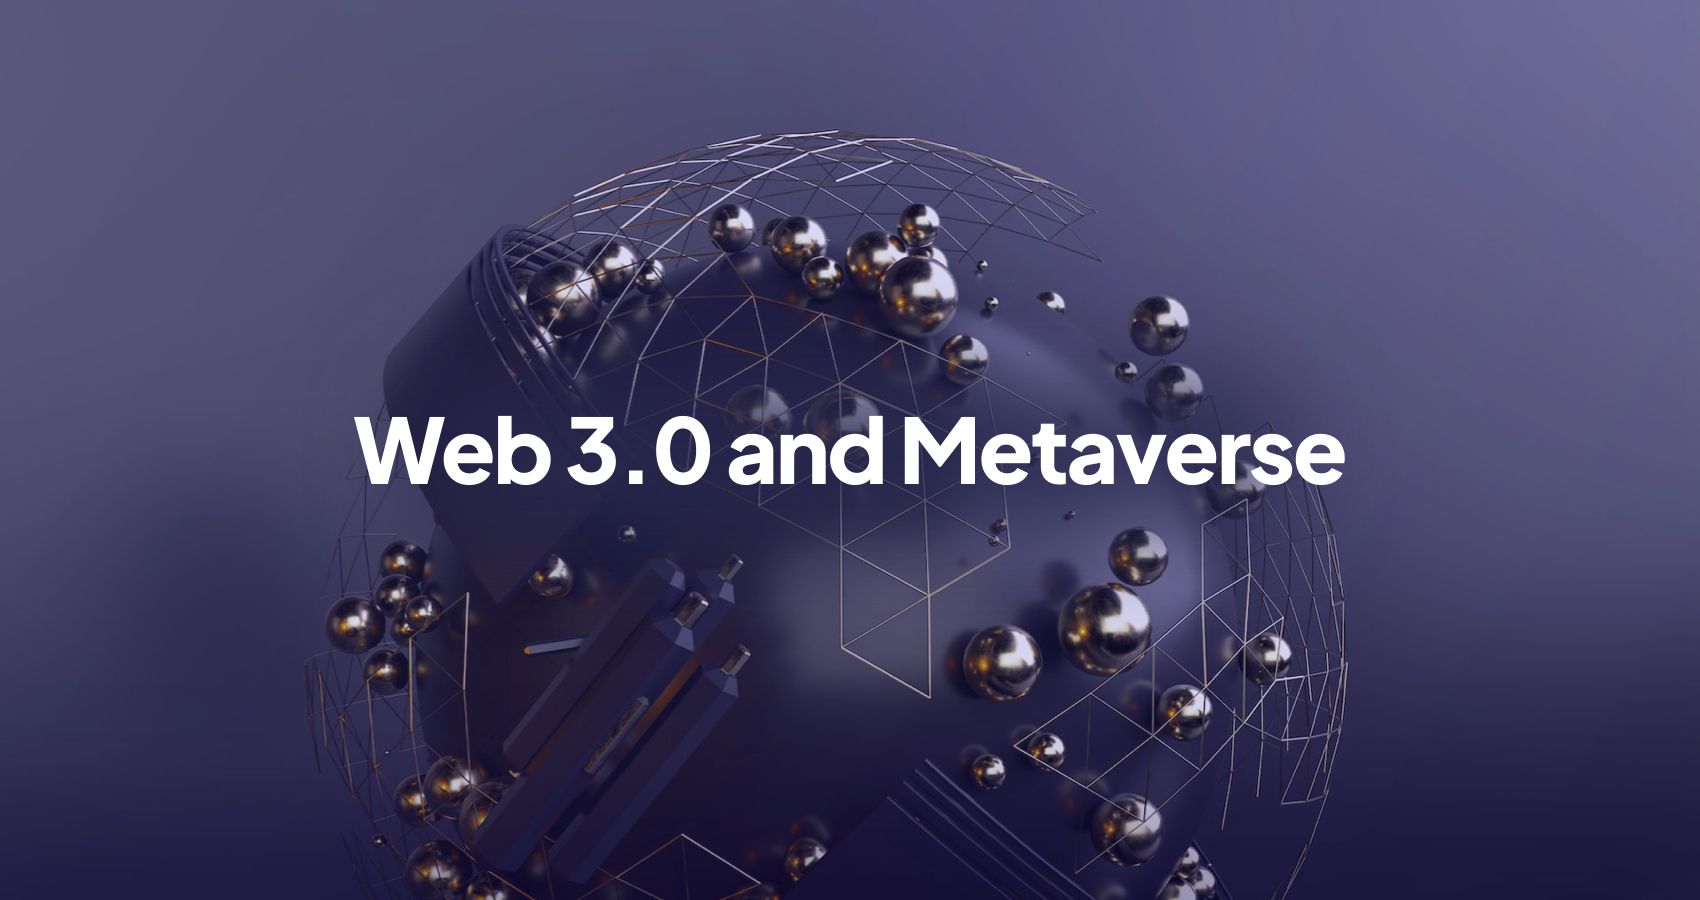 Metaverse - the future of Internet? - mumas